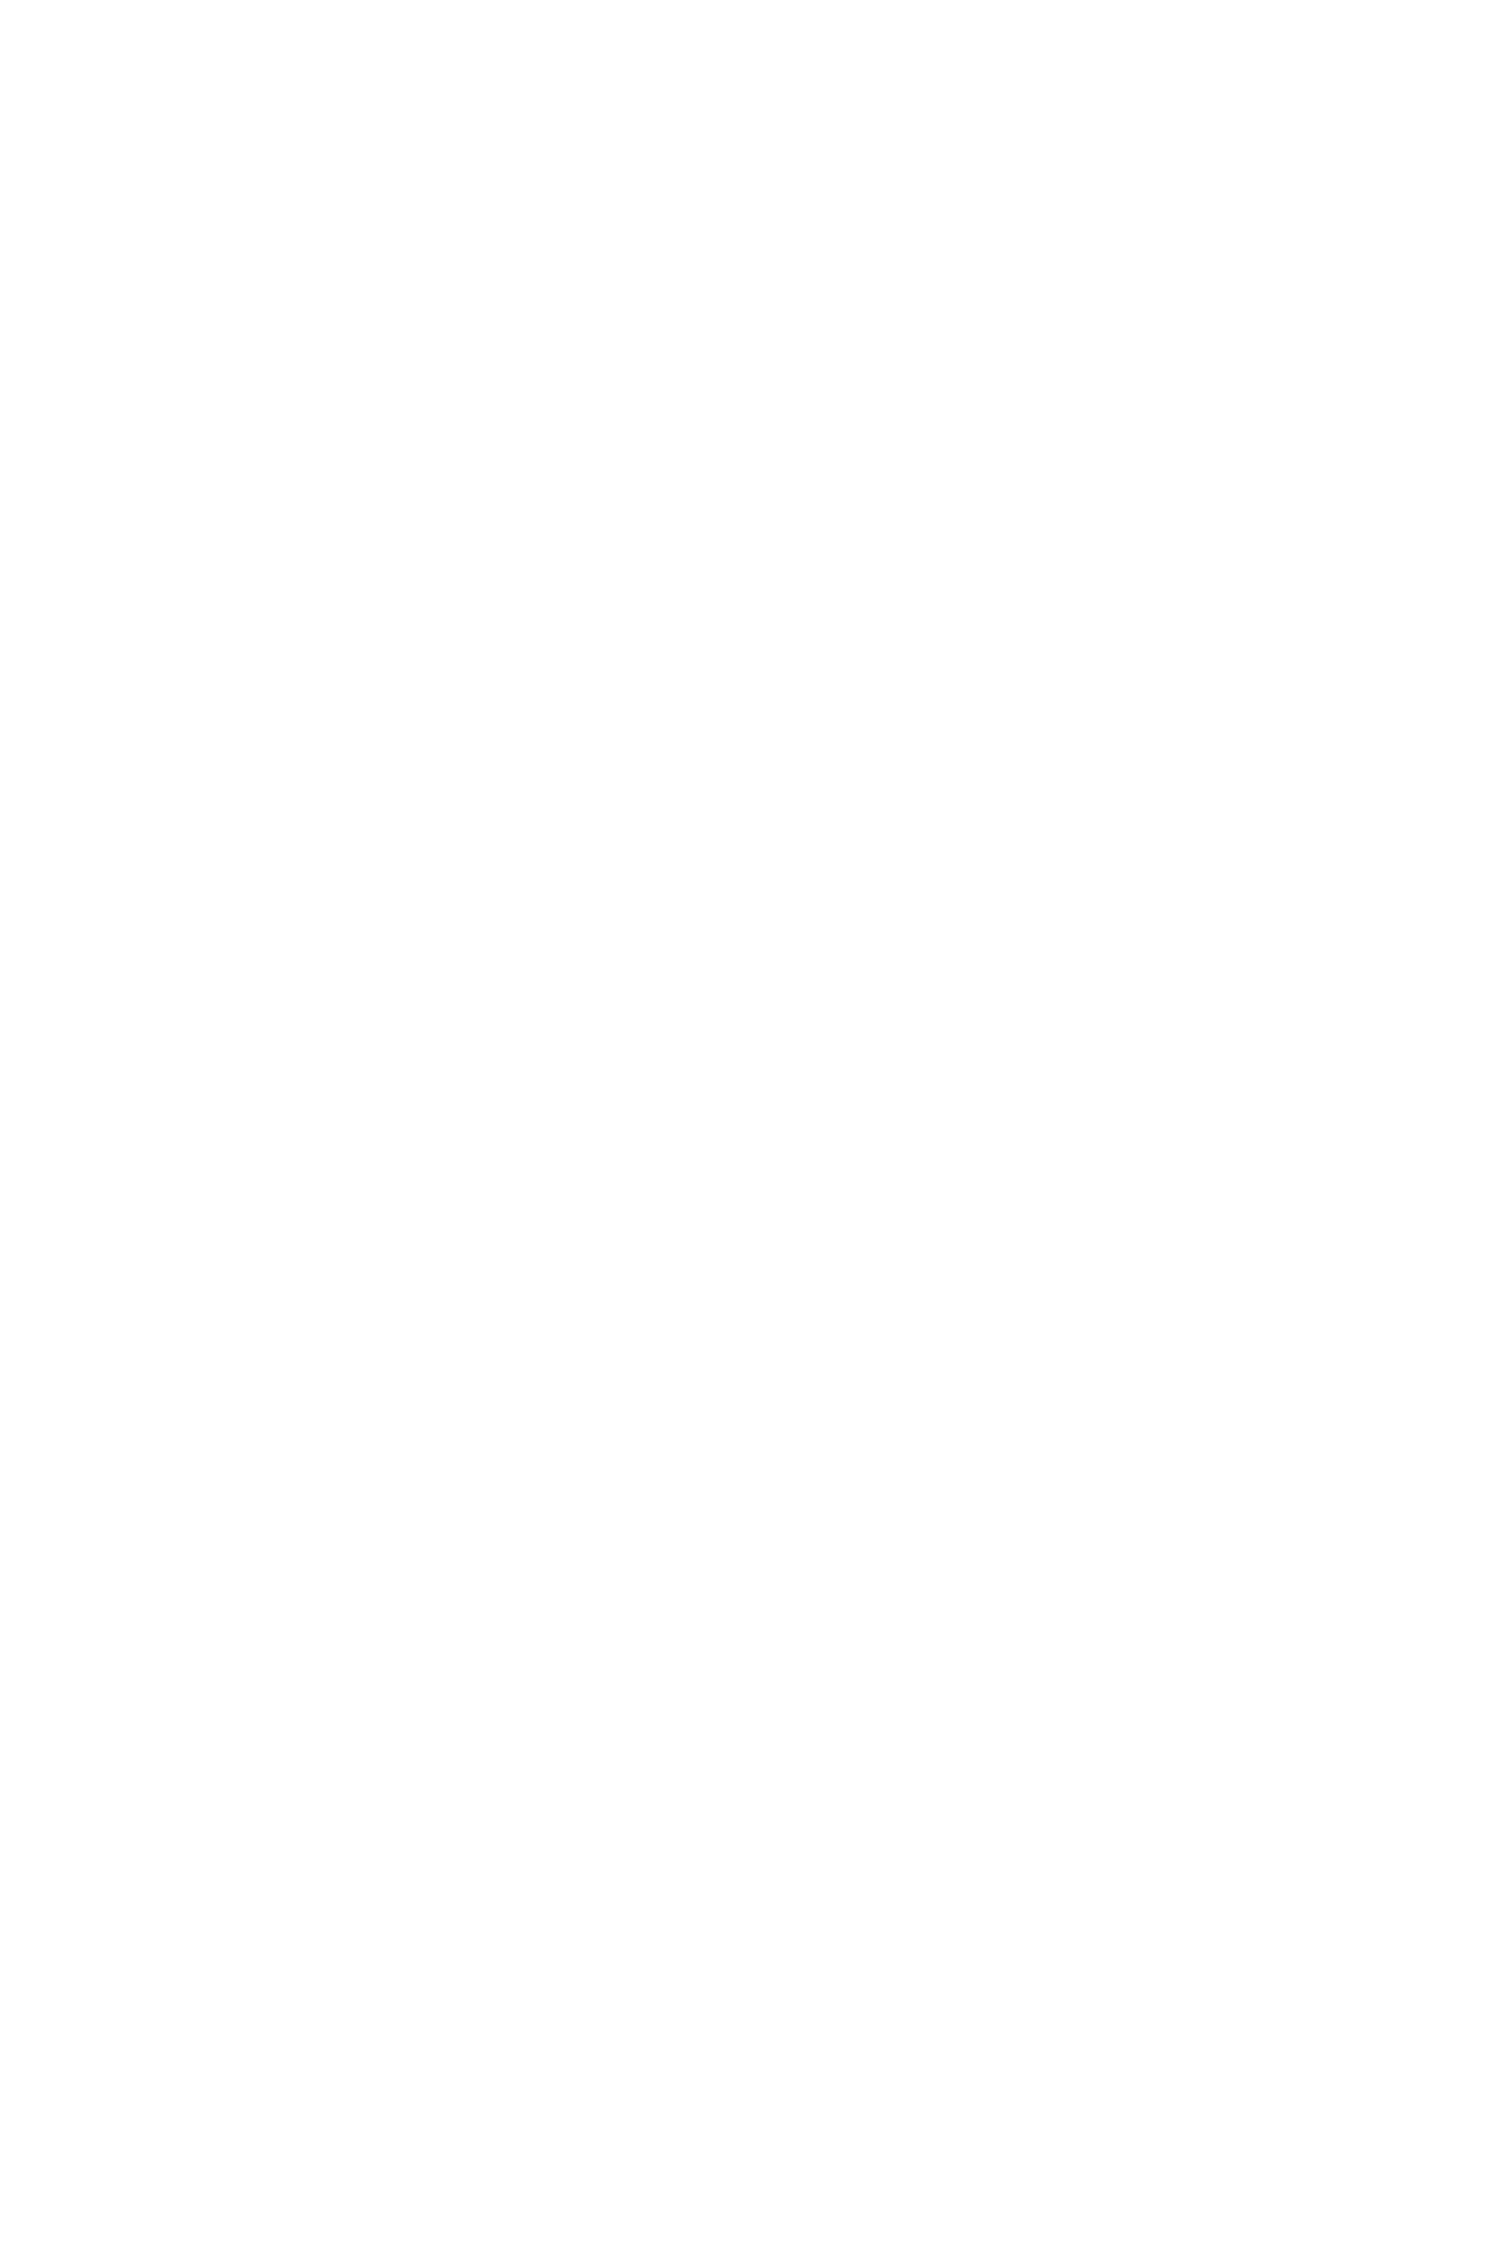 Black and White Market Logo - Bow Market